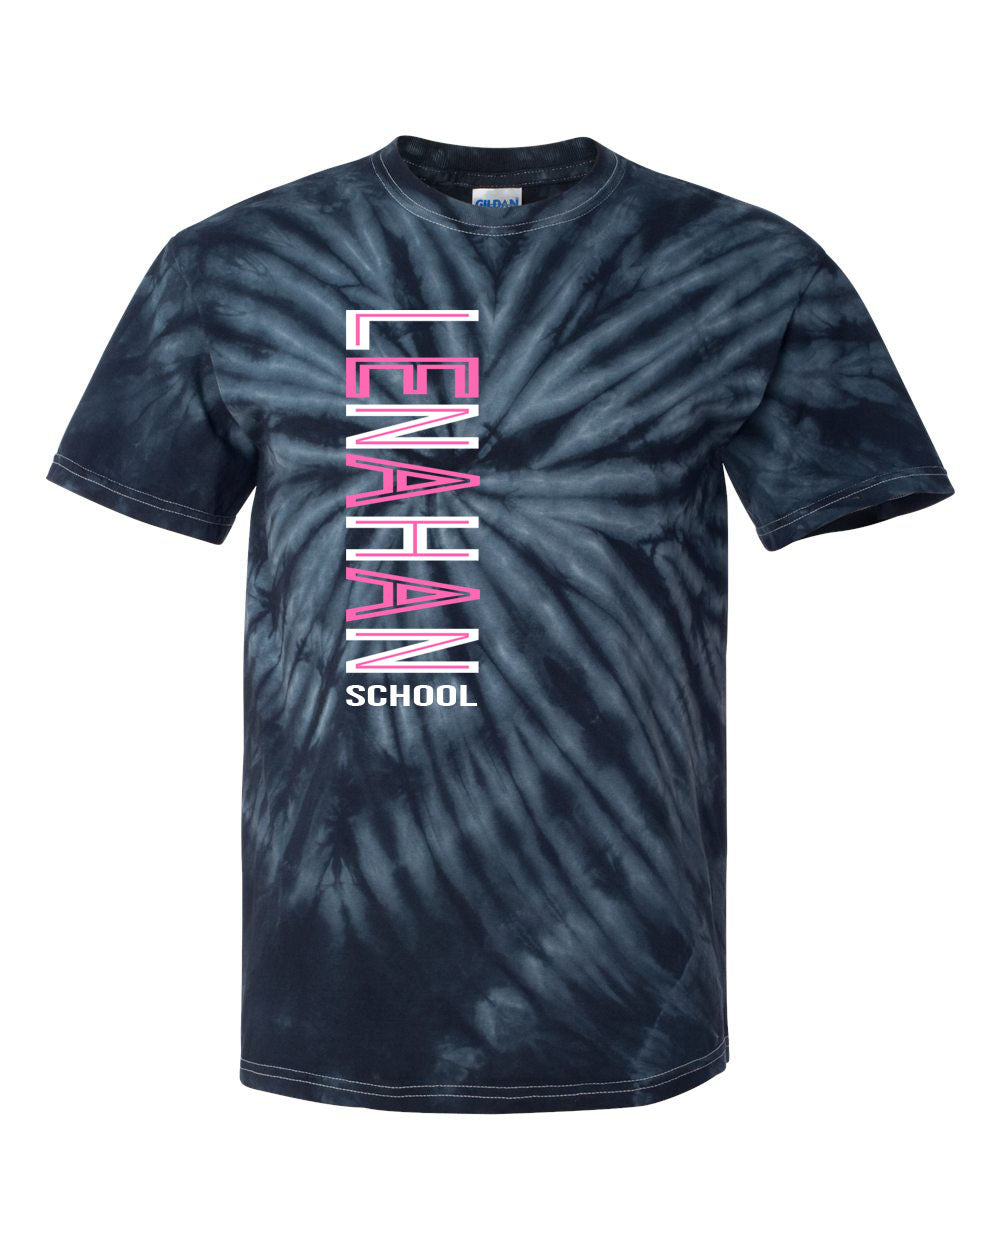 Lenahan Dance Design 3 Tie Dye t-shirt